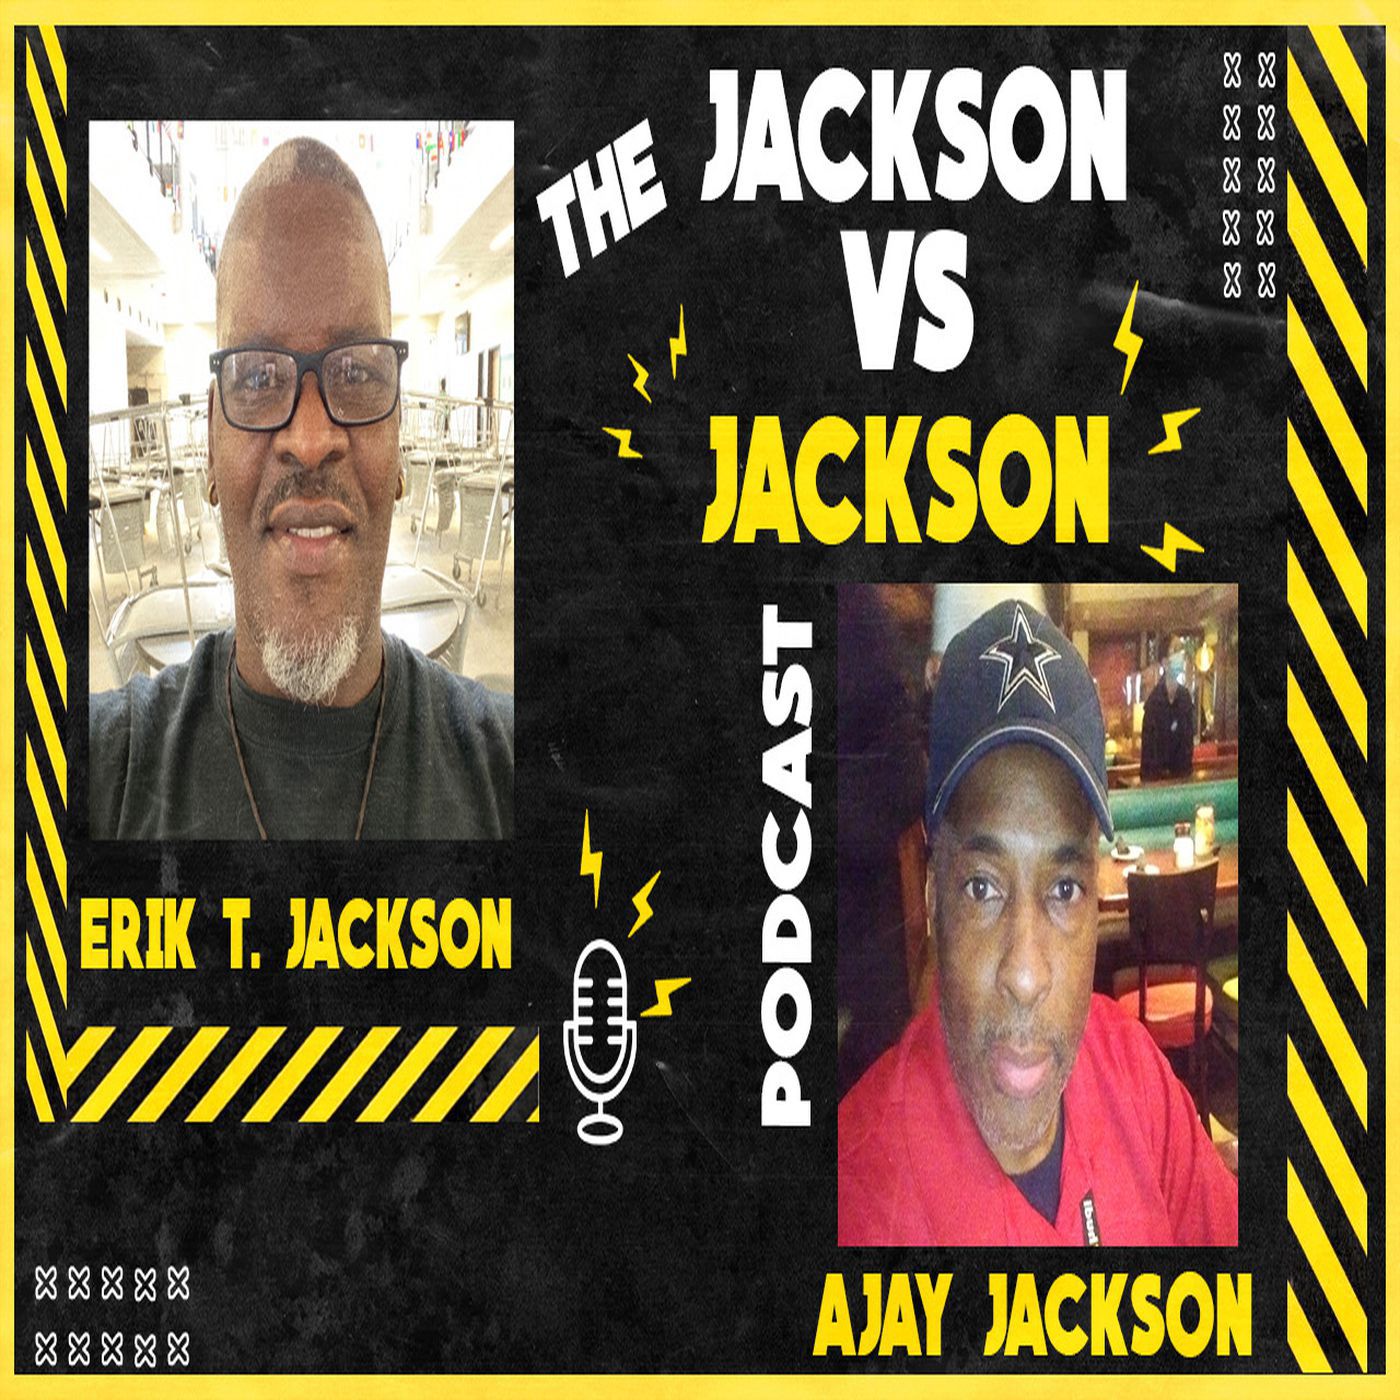 Jackson Vs. Jackson Sports Podcast